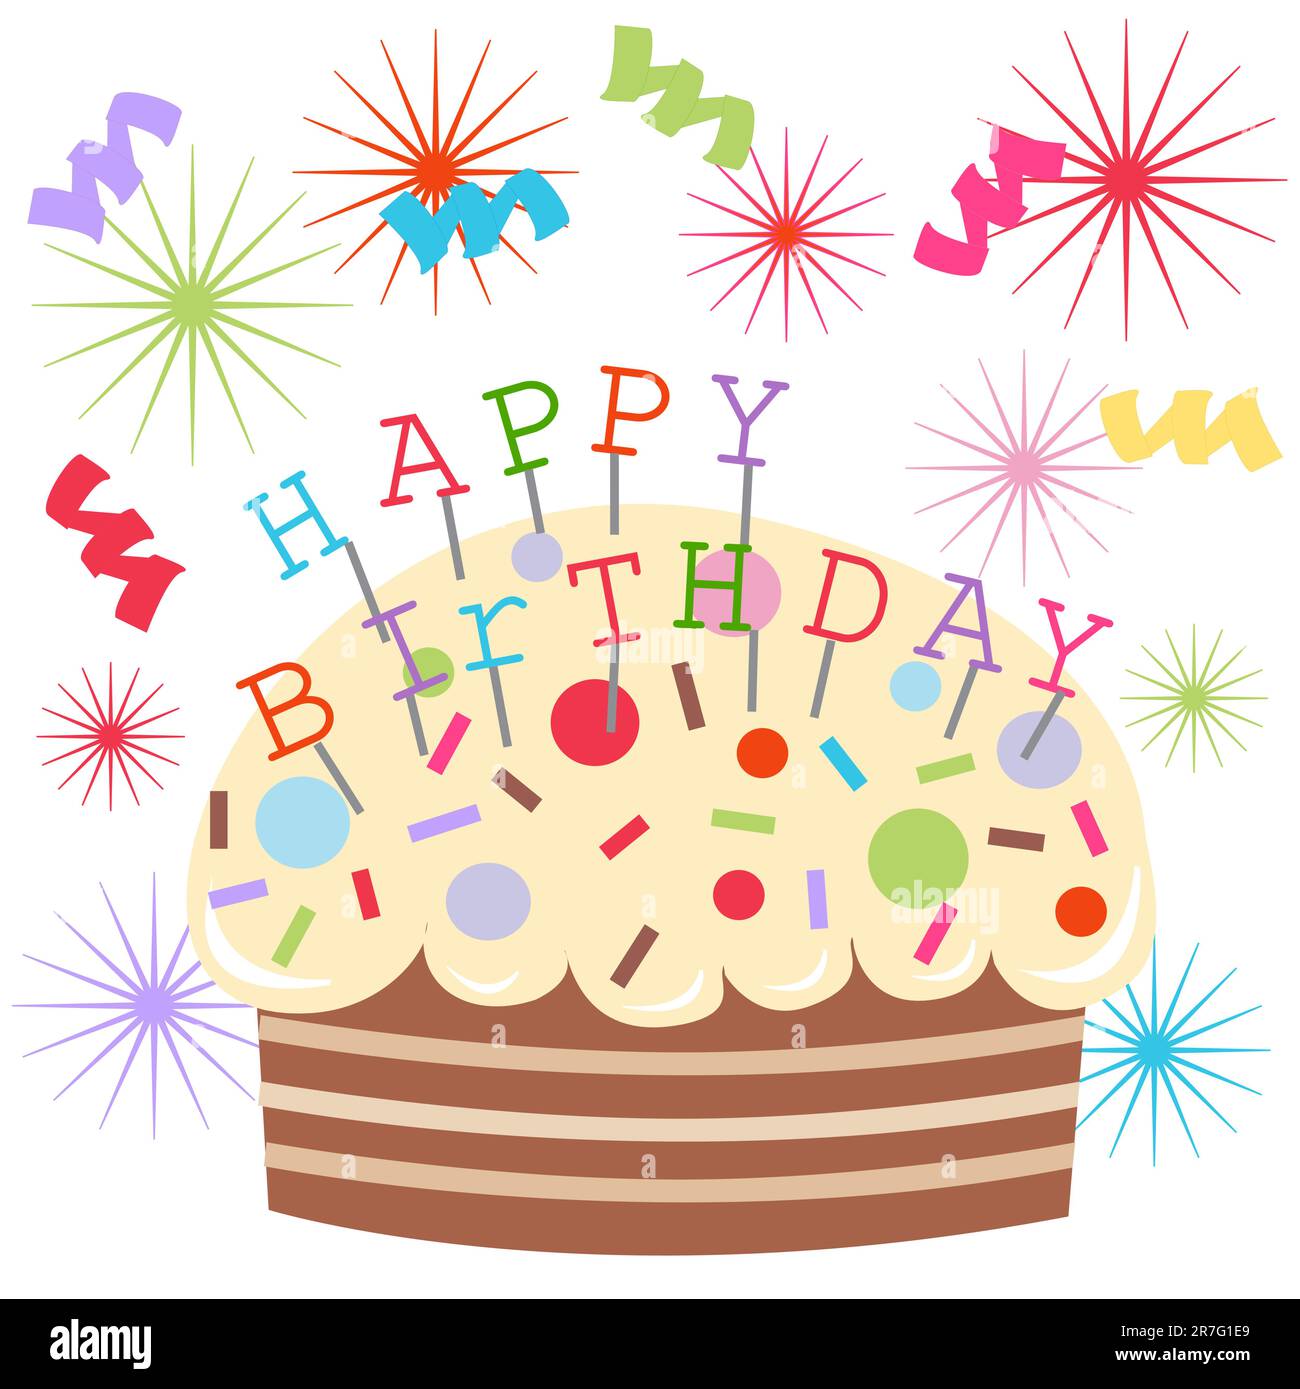 Pastel de Stitch  Lindas tortas de cumpleaños, Decoracion fiesta cumpleaños,  Tarjetas de cumpleaños para imprimir